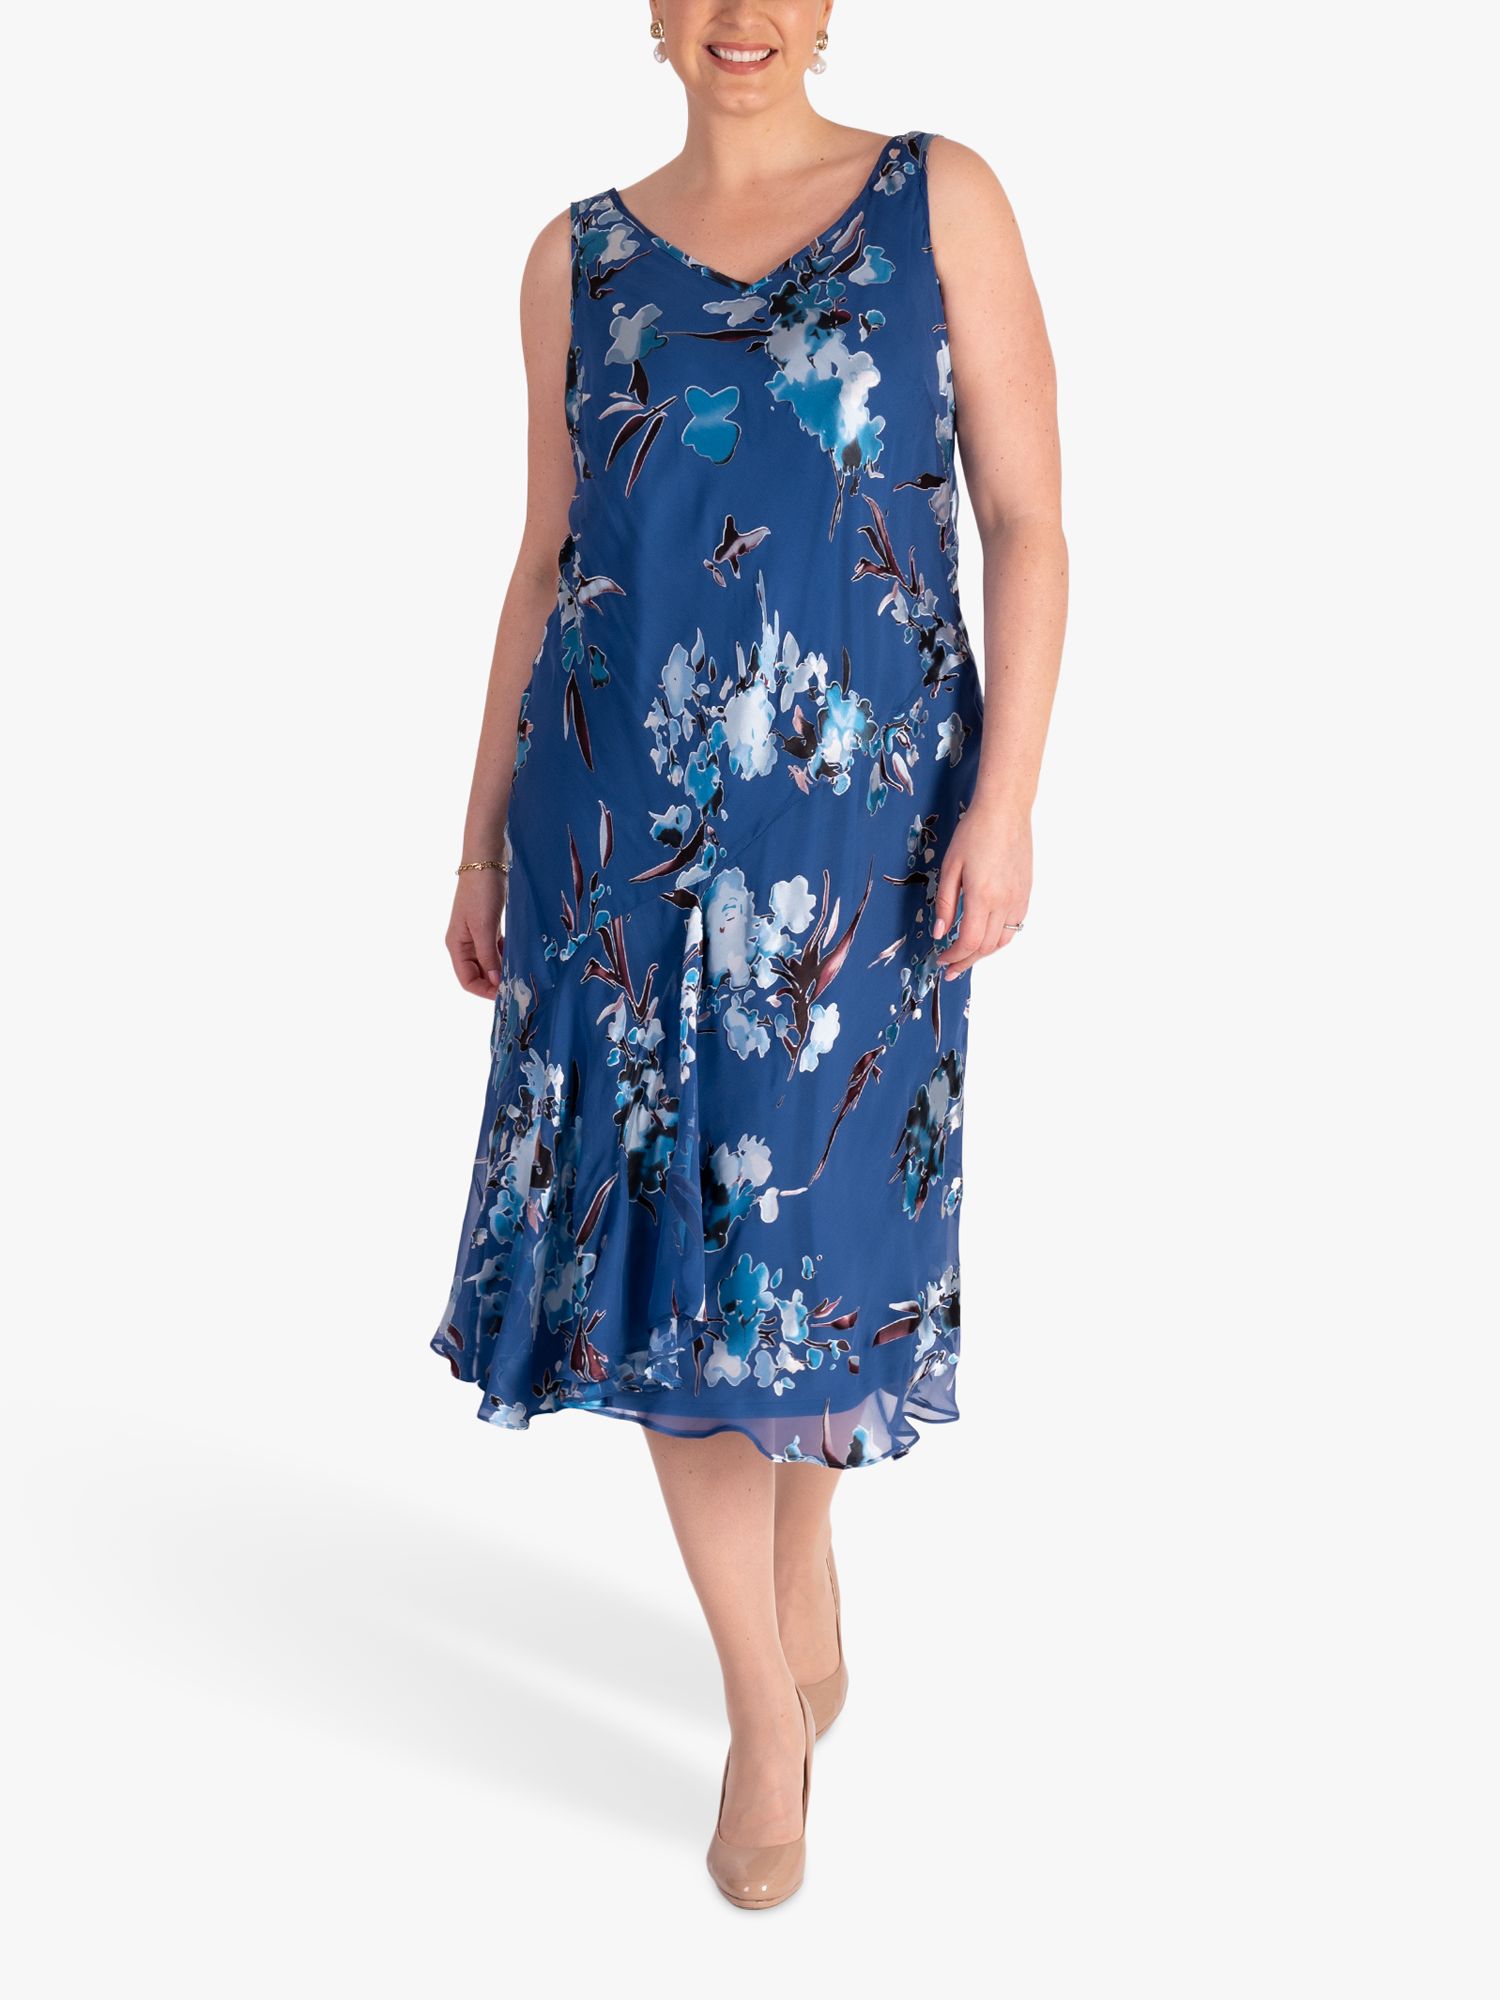 Chesca Bluebird Sleeveless Dress, Bluebird/Multi